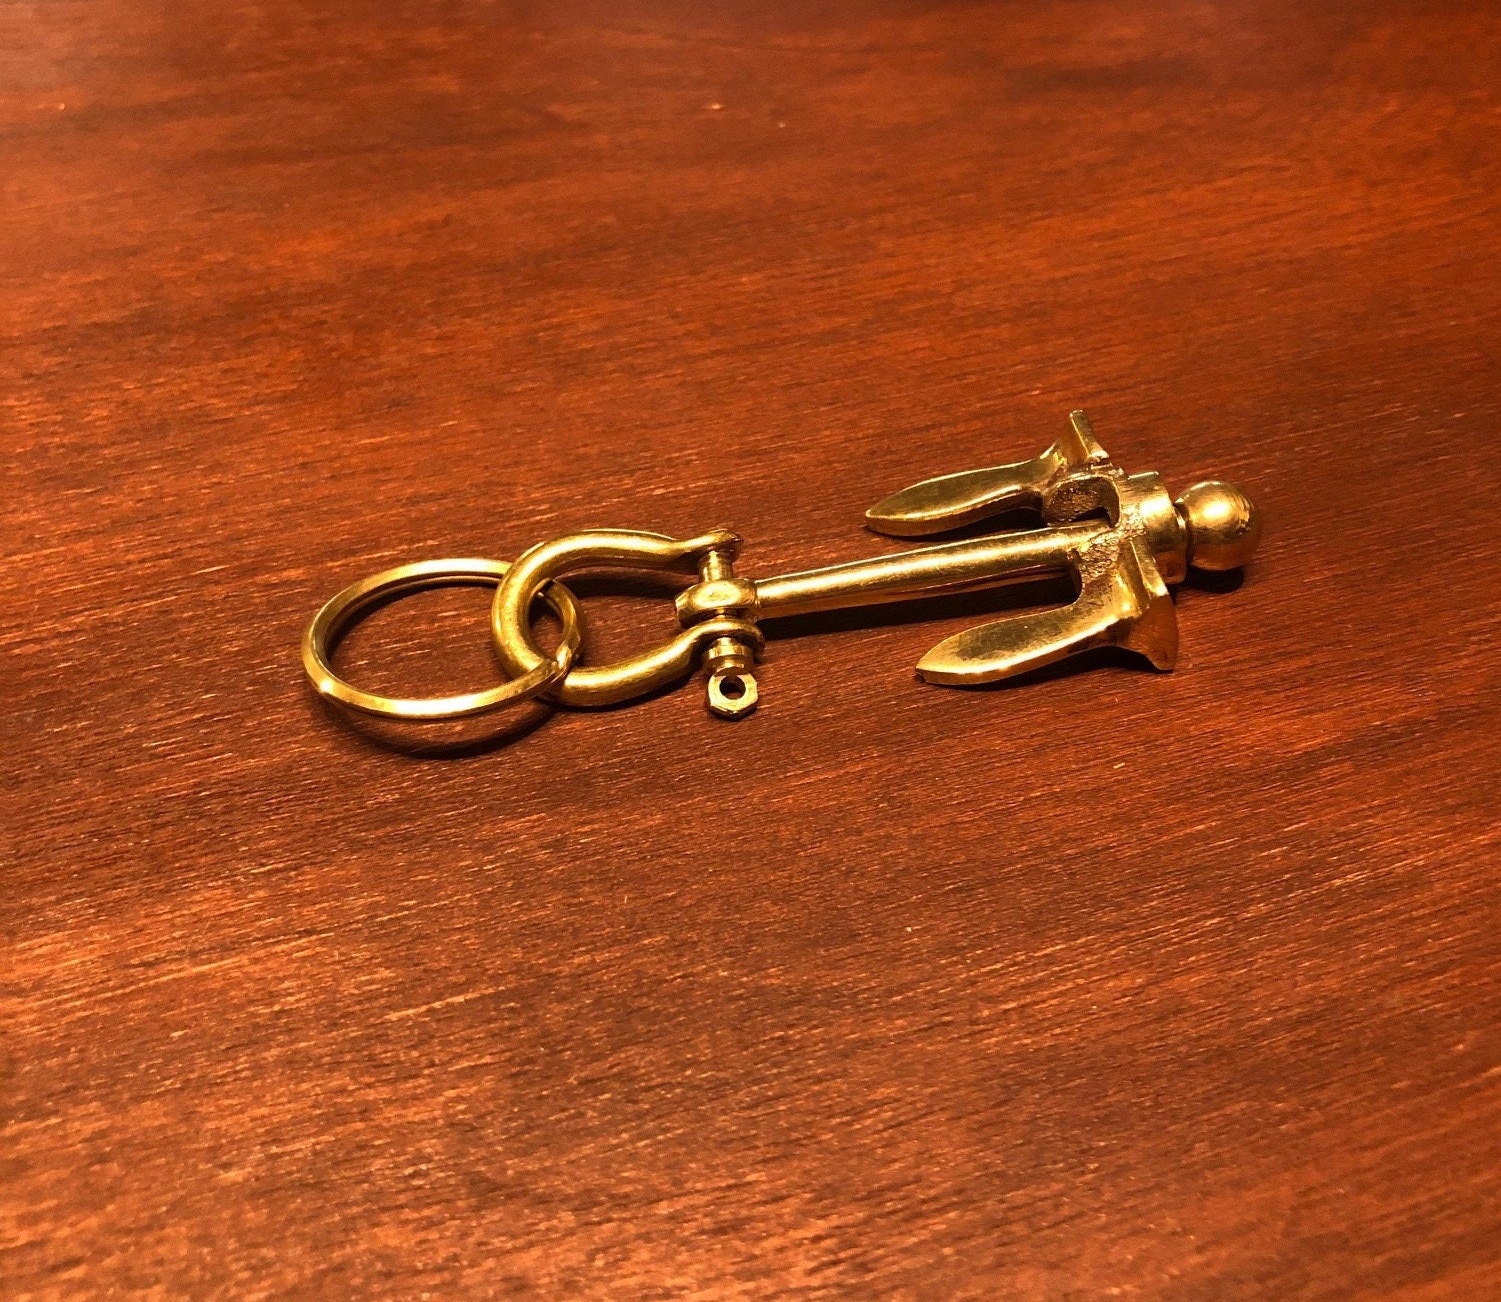 Engravable Brass Key Chain